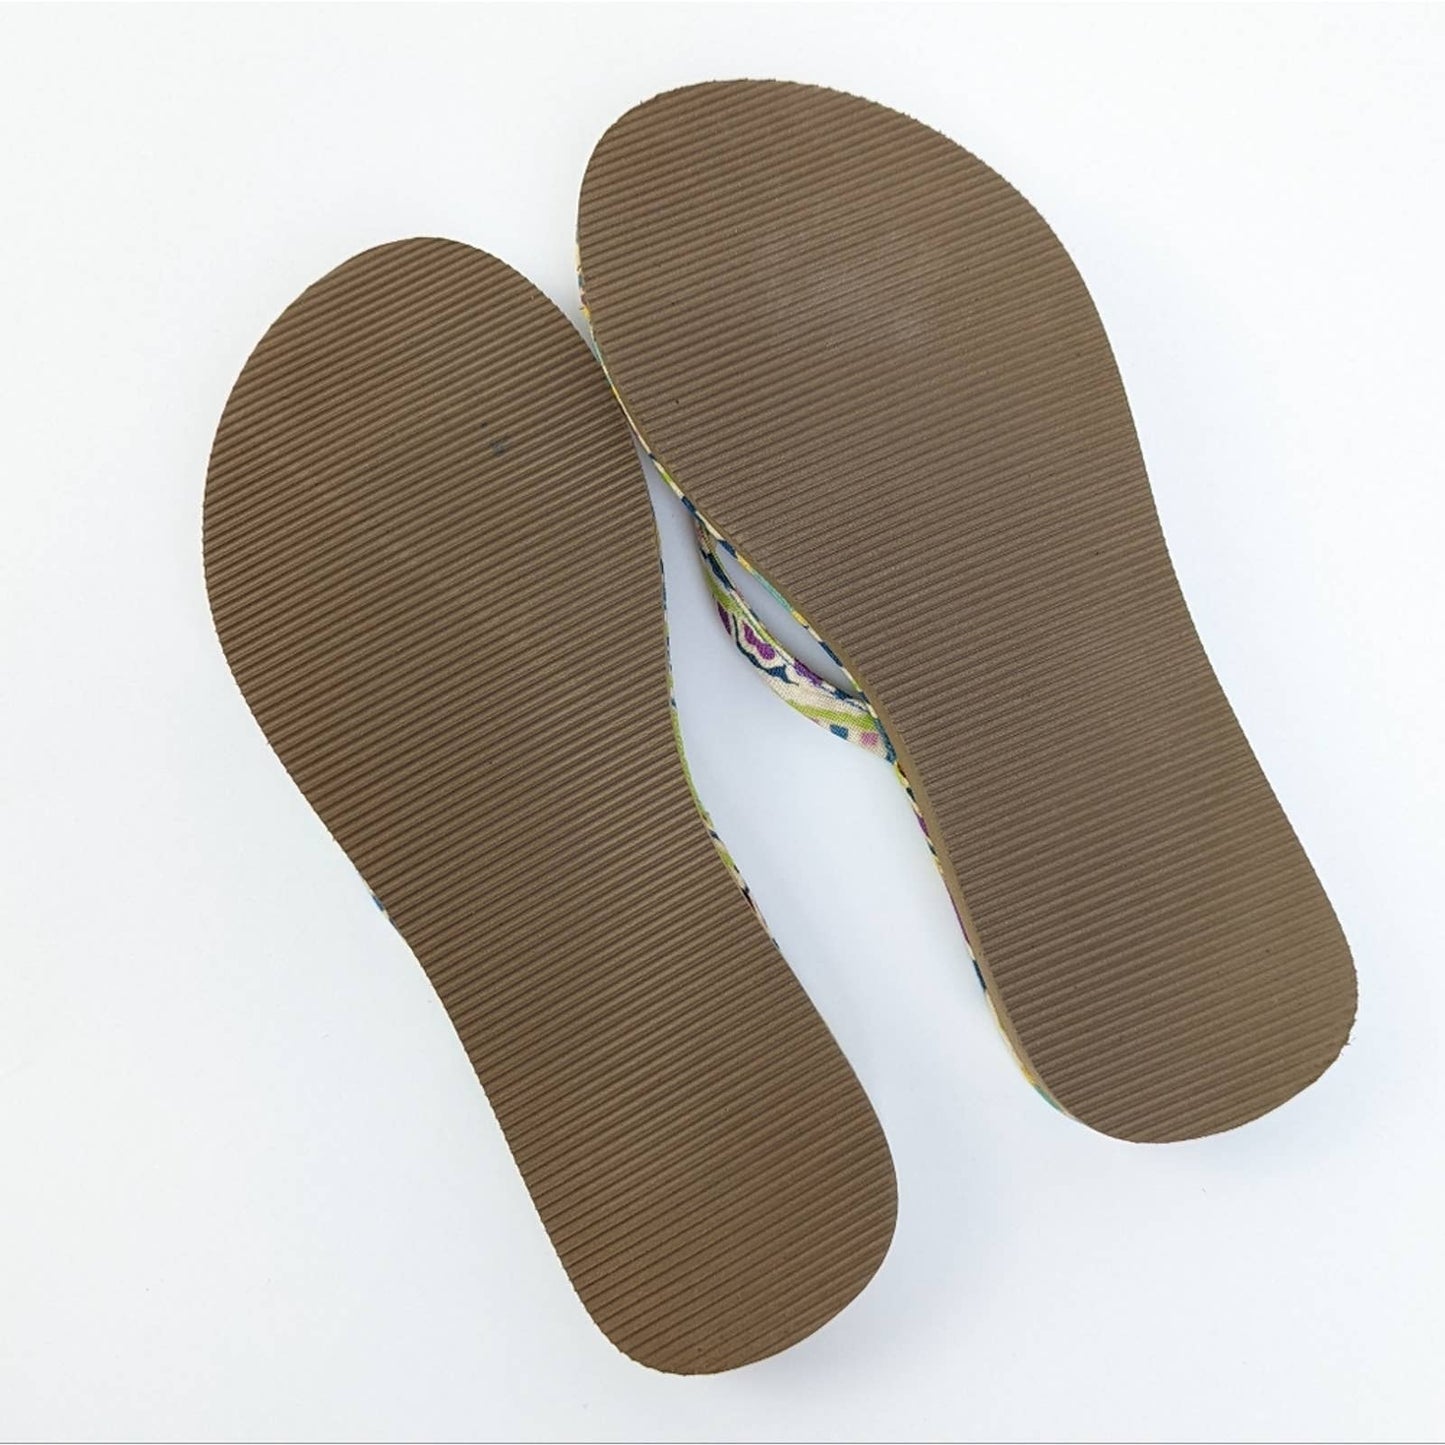 Vera Bradley Straw Flip Flop Sandals in Capri Blue - 6.5